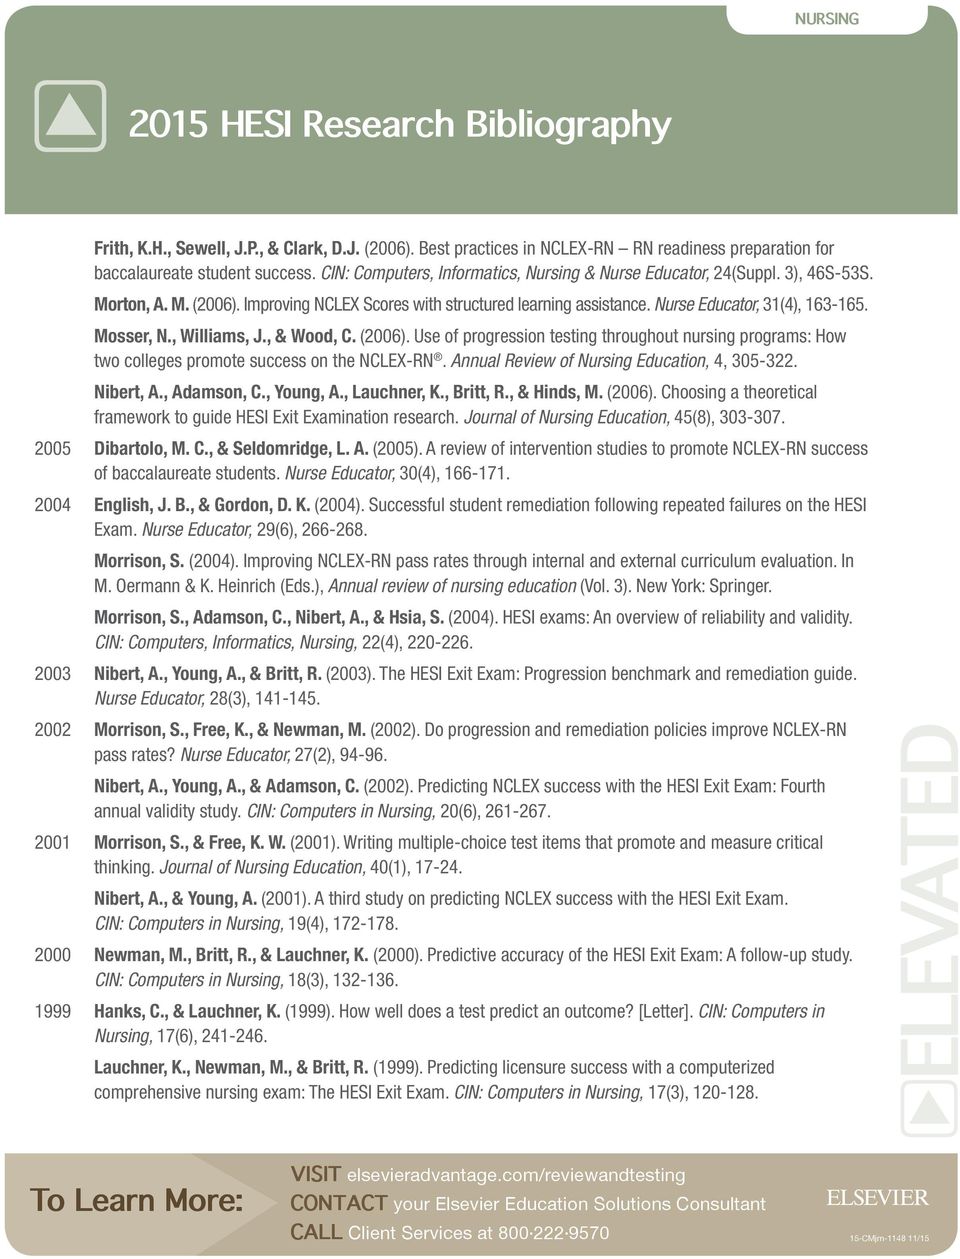 Annual Review of Nursing Education, 4, 305-322. Nibert, A., Adamson, C., Young, A., Lauchner, K., Britt, R., & Hinds, M. (2006).